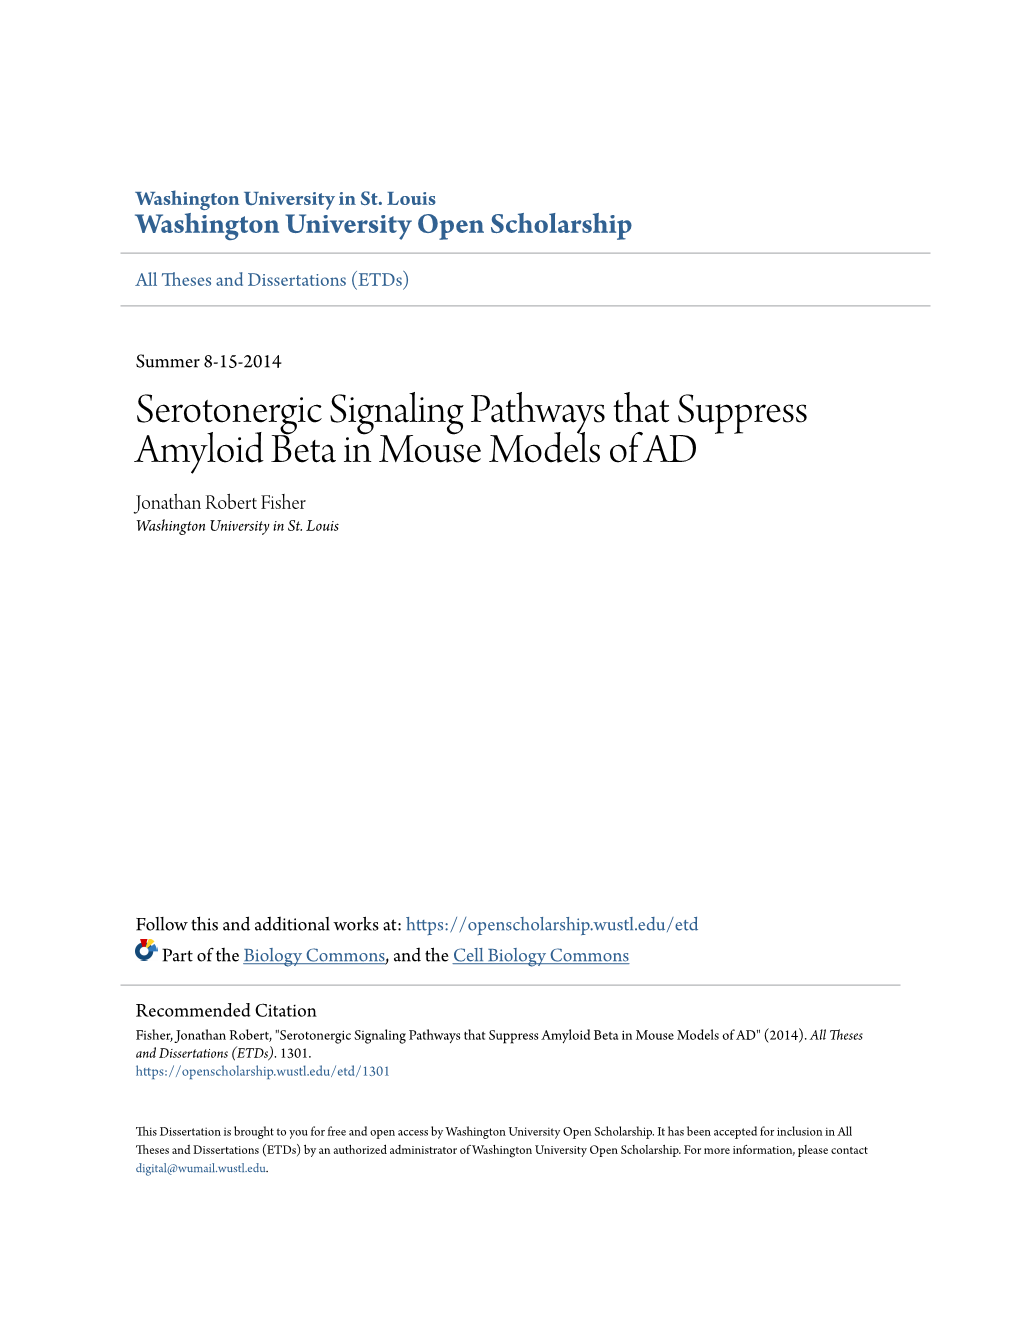 Serotonergic Signaling Pathways That Suppress Amyloid Beta in Mouse Models of AD Jonathan Robert Fisher Washington University in St